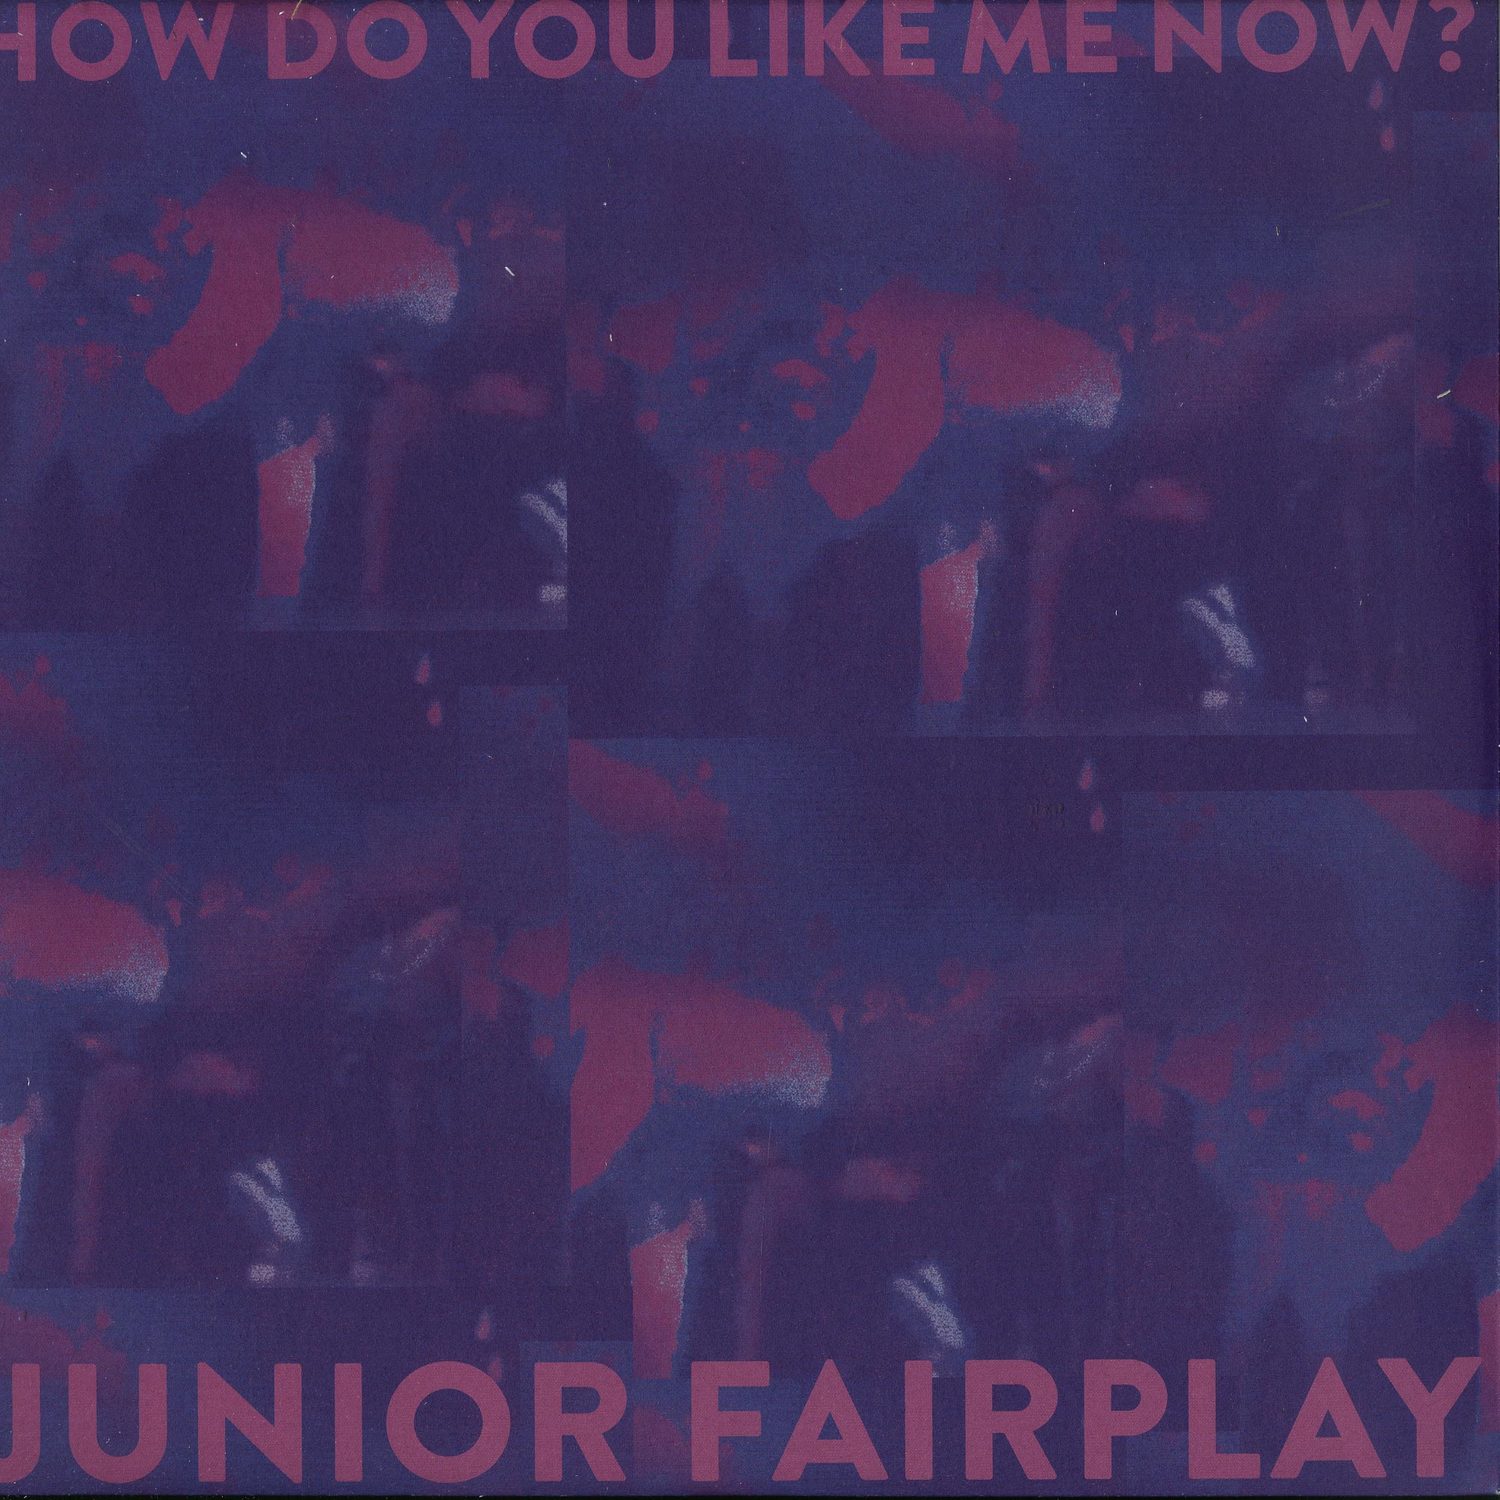 Junior Fairplay - HOW DO YOU LIKE ME NOW?